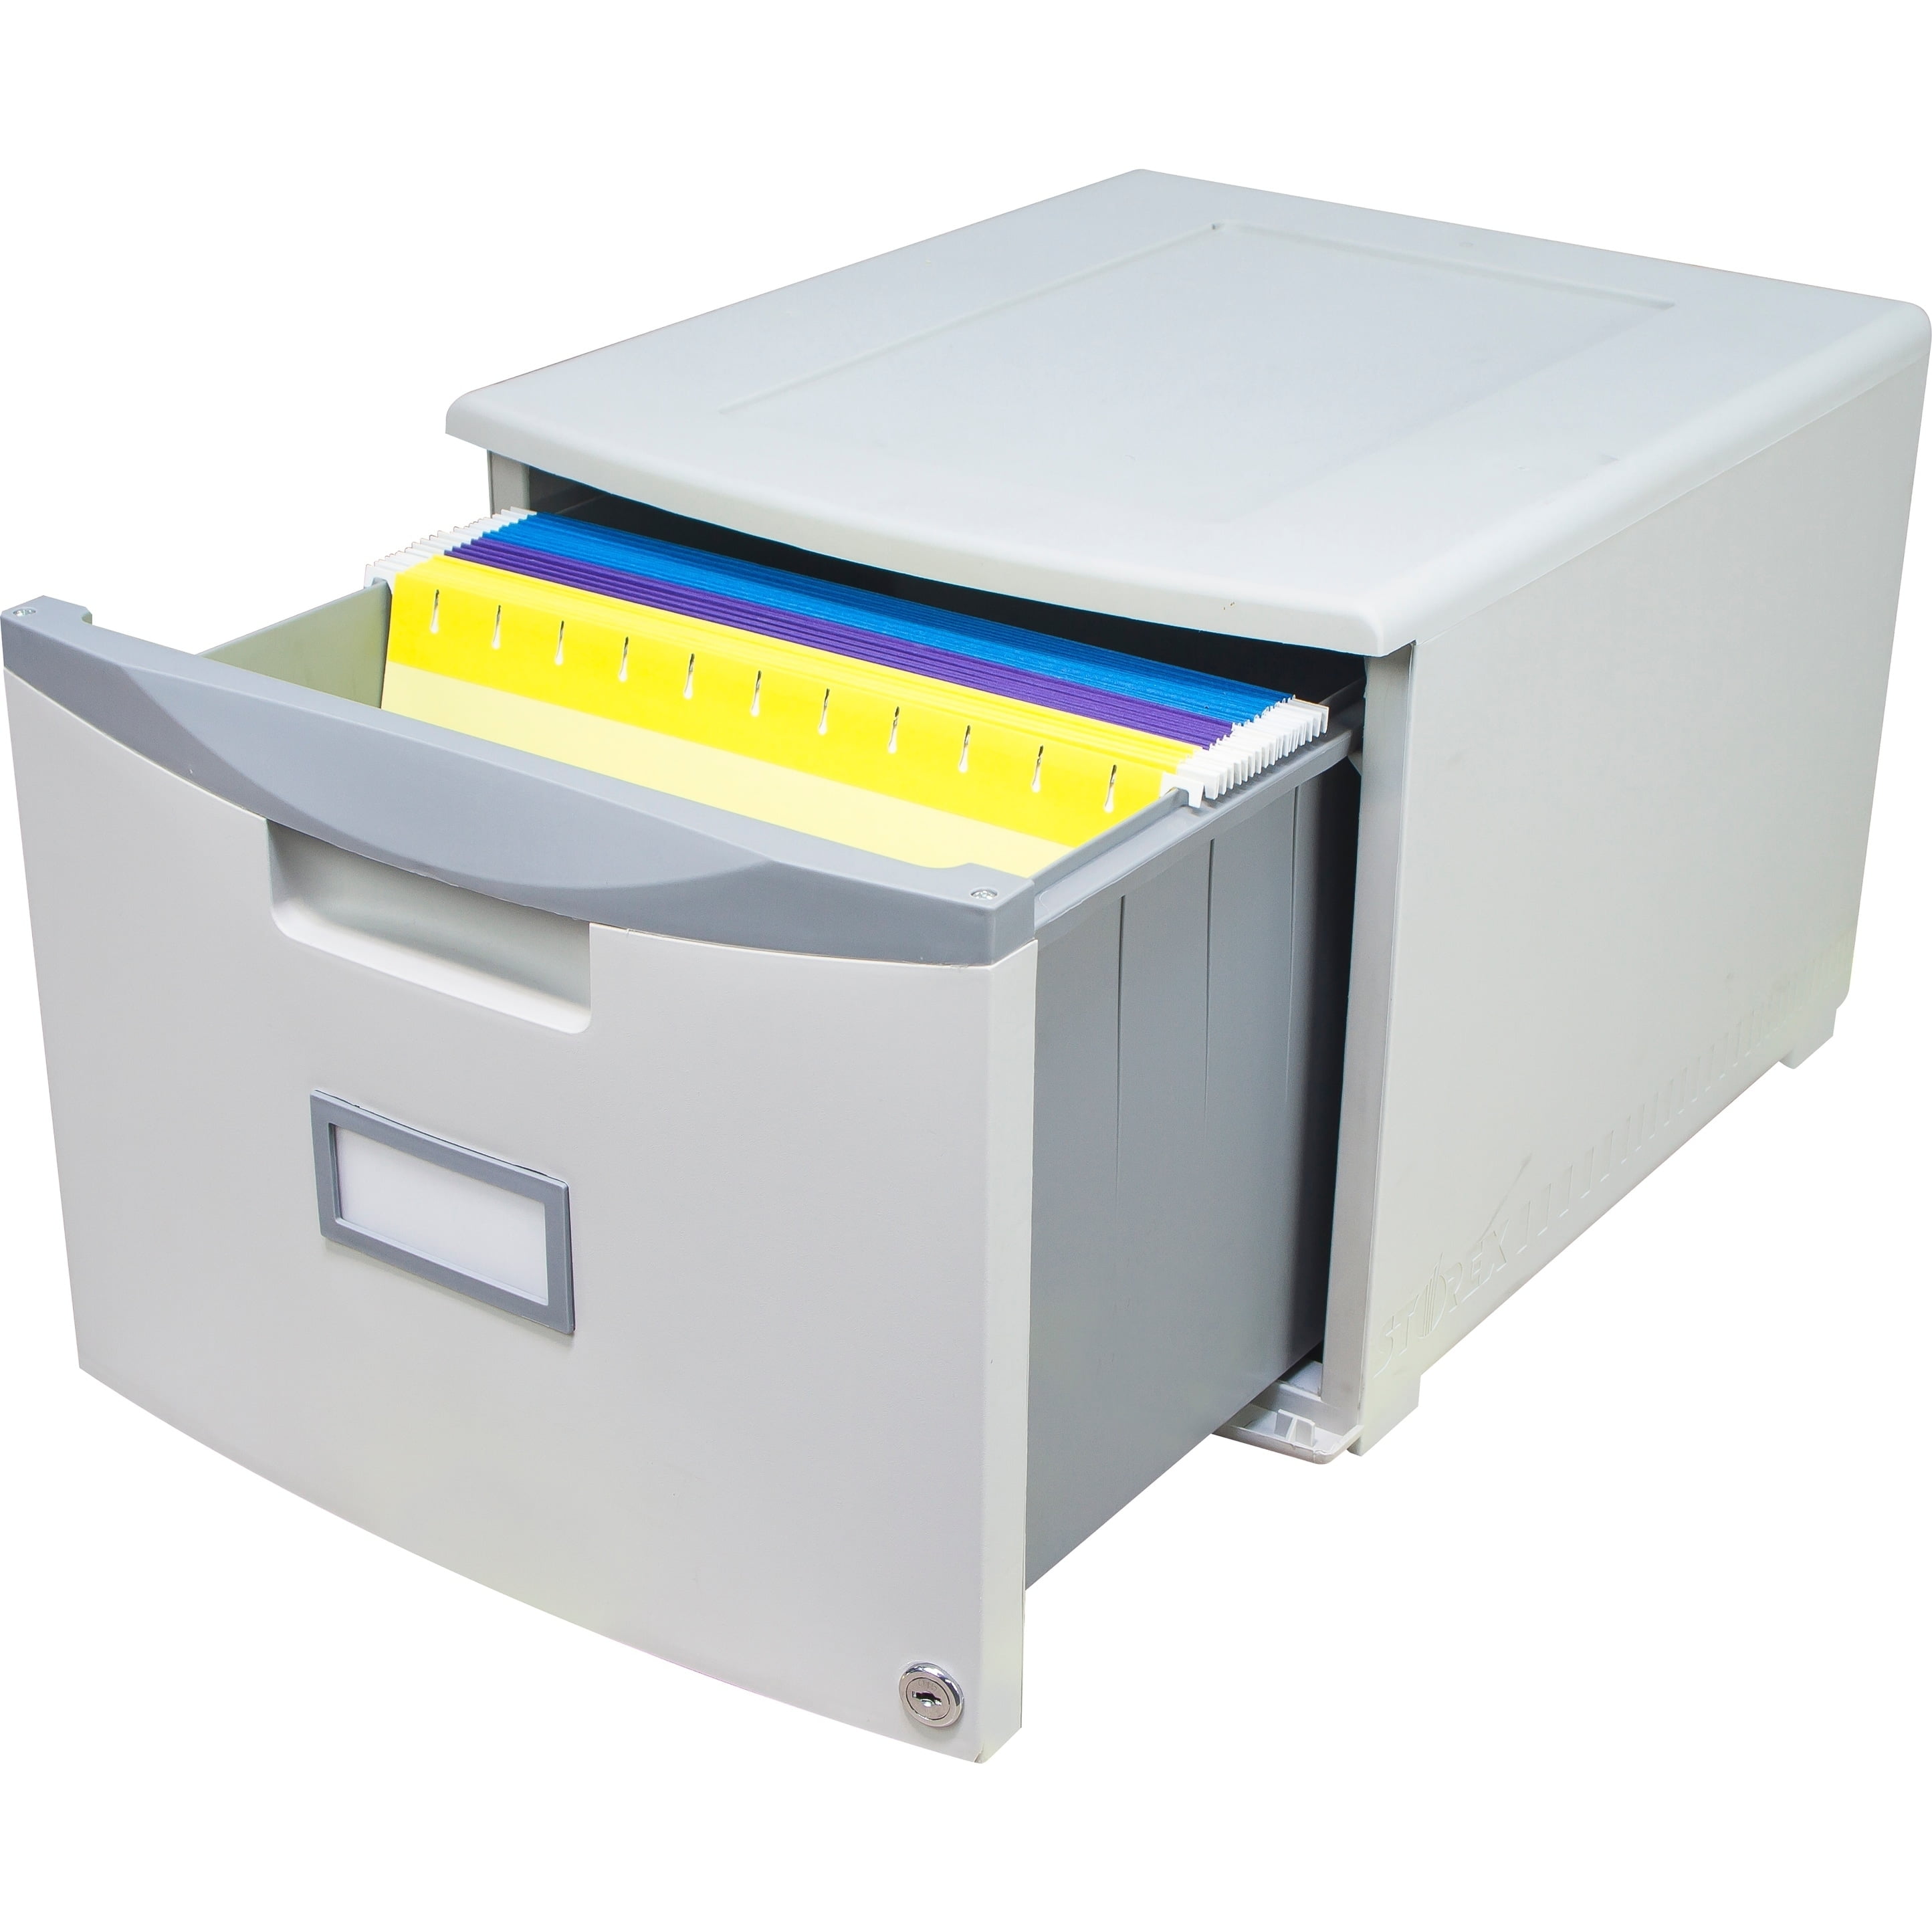 Storex 61261b01c Plastic 1 Drawer Portable File Cabinet Gray Case Of 2 Letter Legal Gray